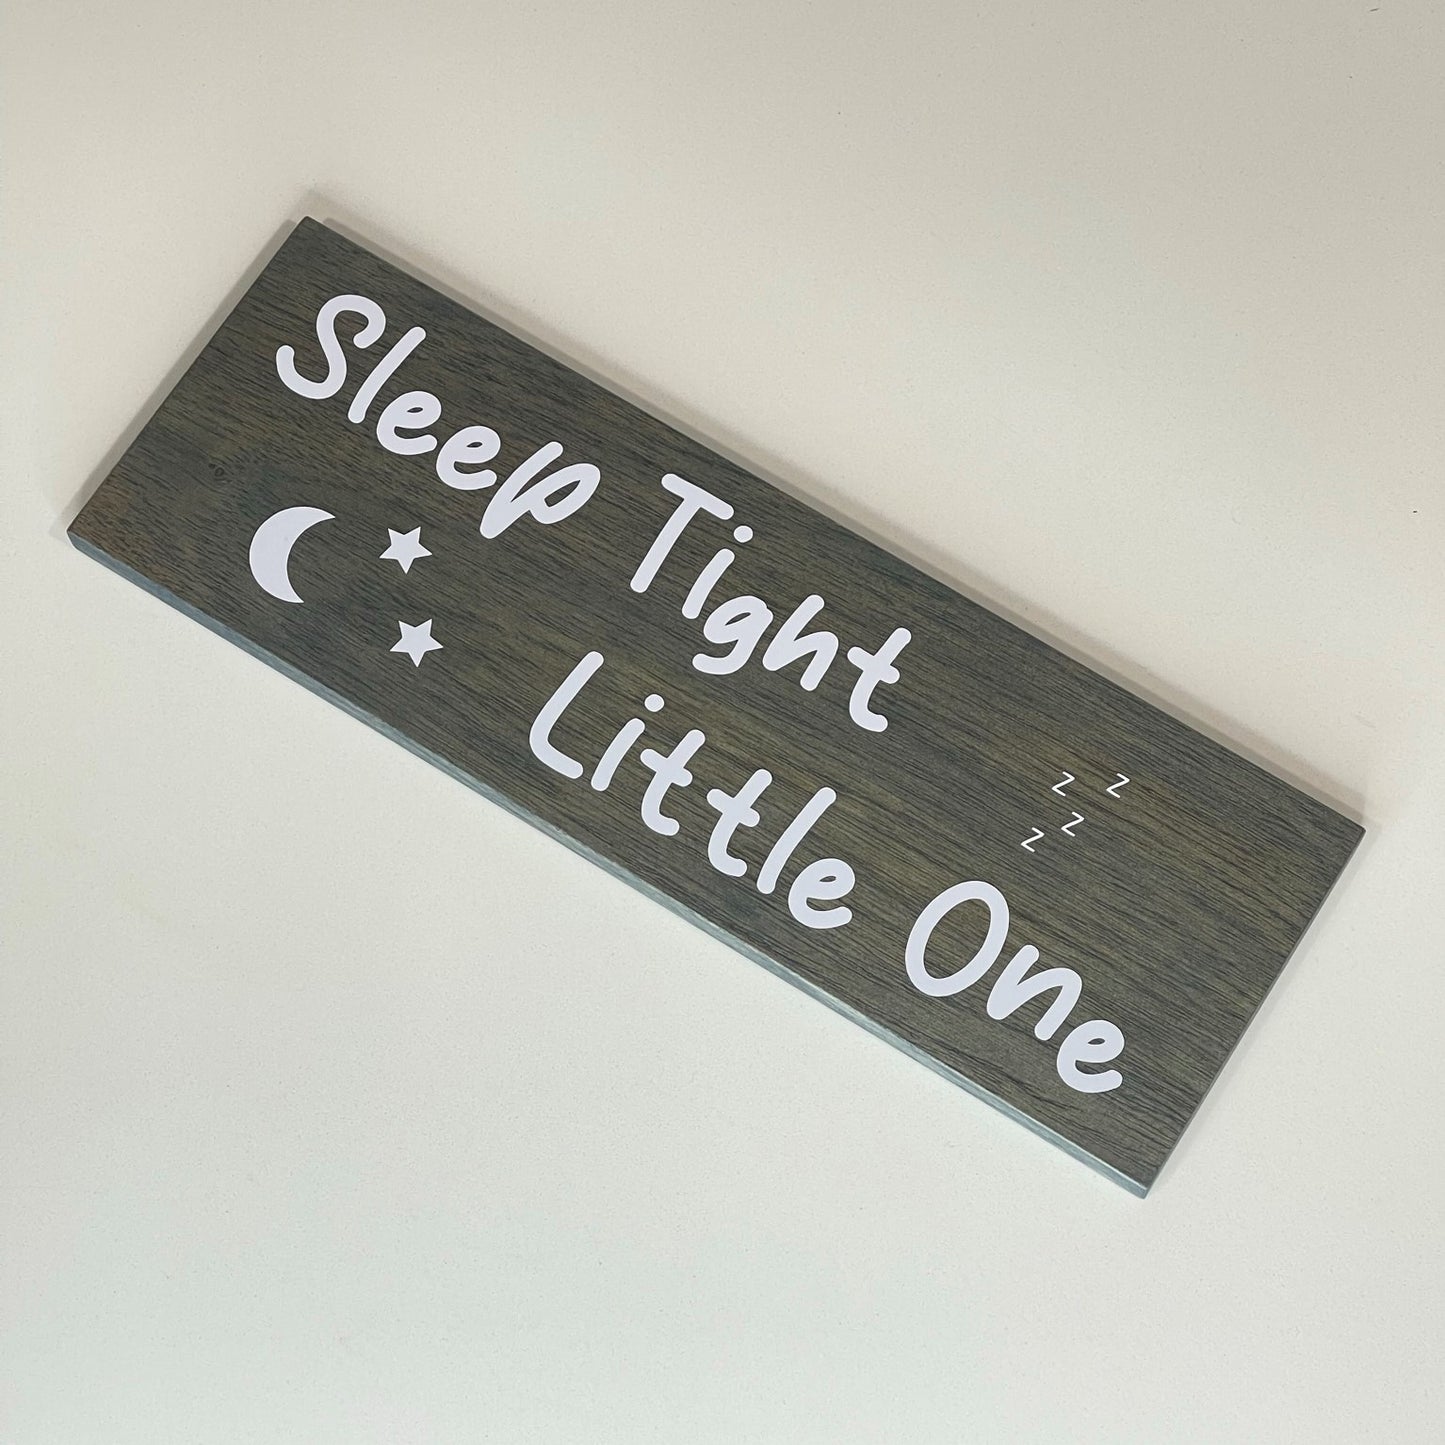 Sleep Tight Little One - Cute Sign - Wall Decor - Wall Art - Wooden Sign